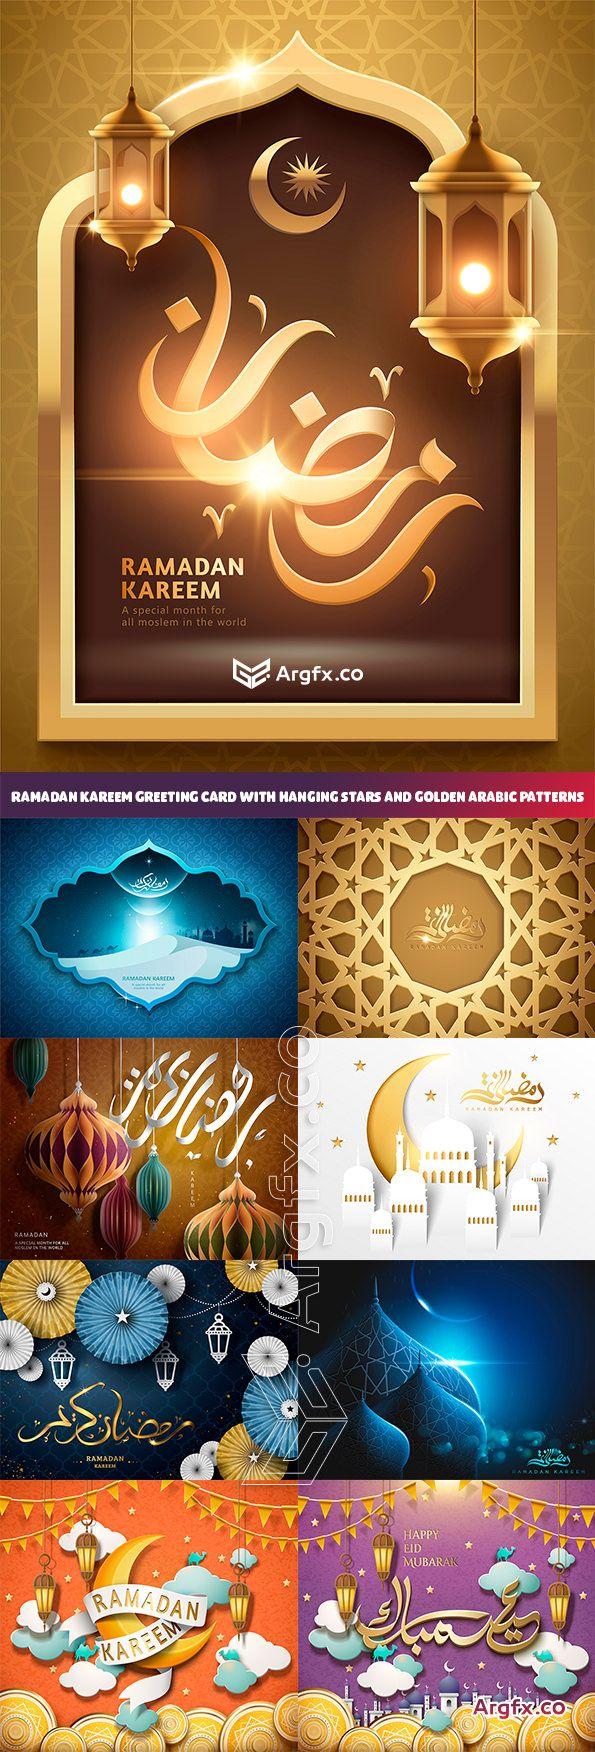 Golden Arabic Logo - Ramadan kareem greeting card with hanging stars and golden arabic ...